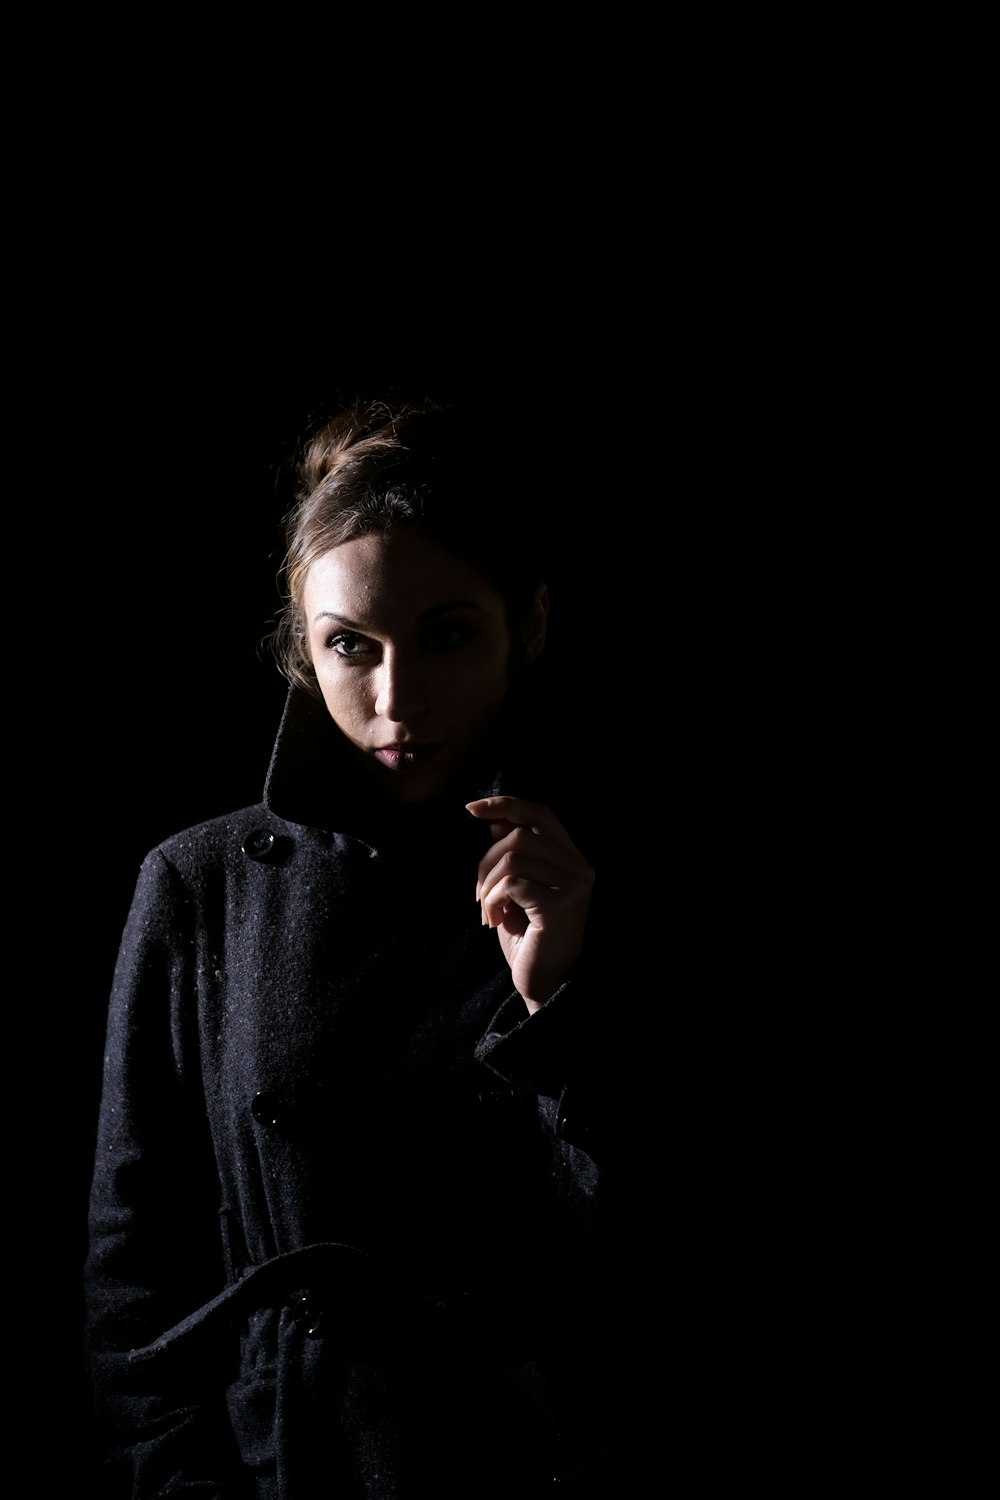 girl wearing black coat